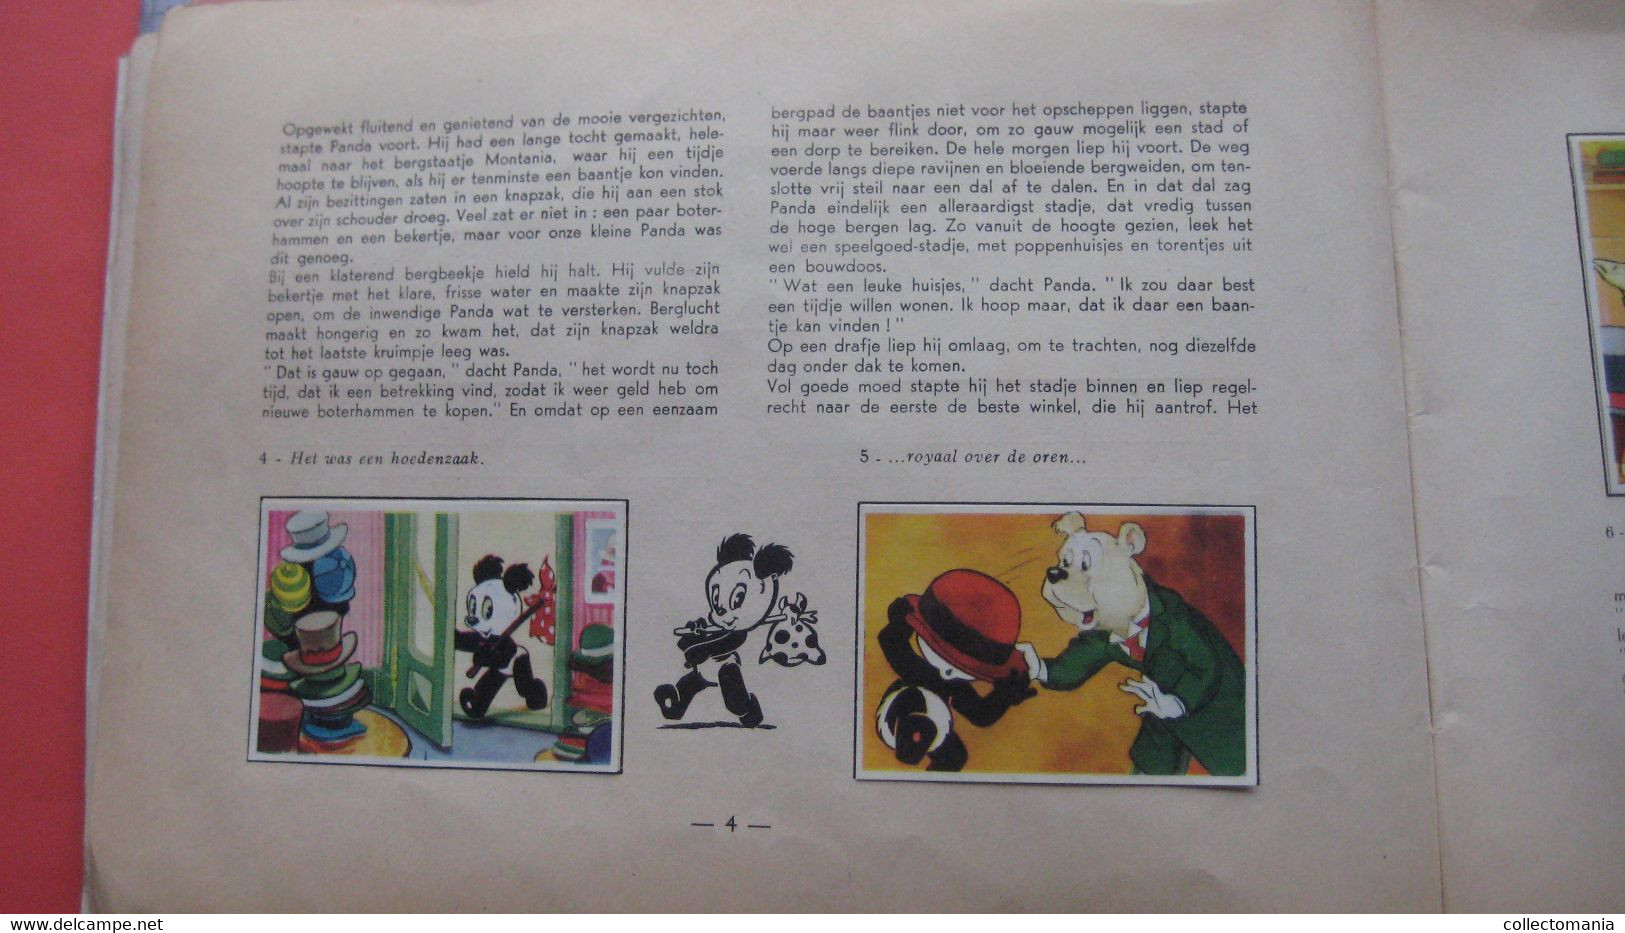 1e druk - REKLAME strip chromo ALBUM,  Panda en de meester-kruidenier, ill. Maarten Toonder, 1959 DE VOLHARDING